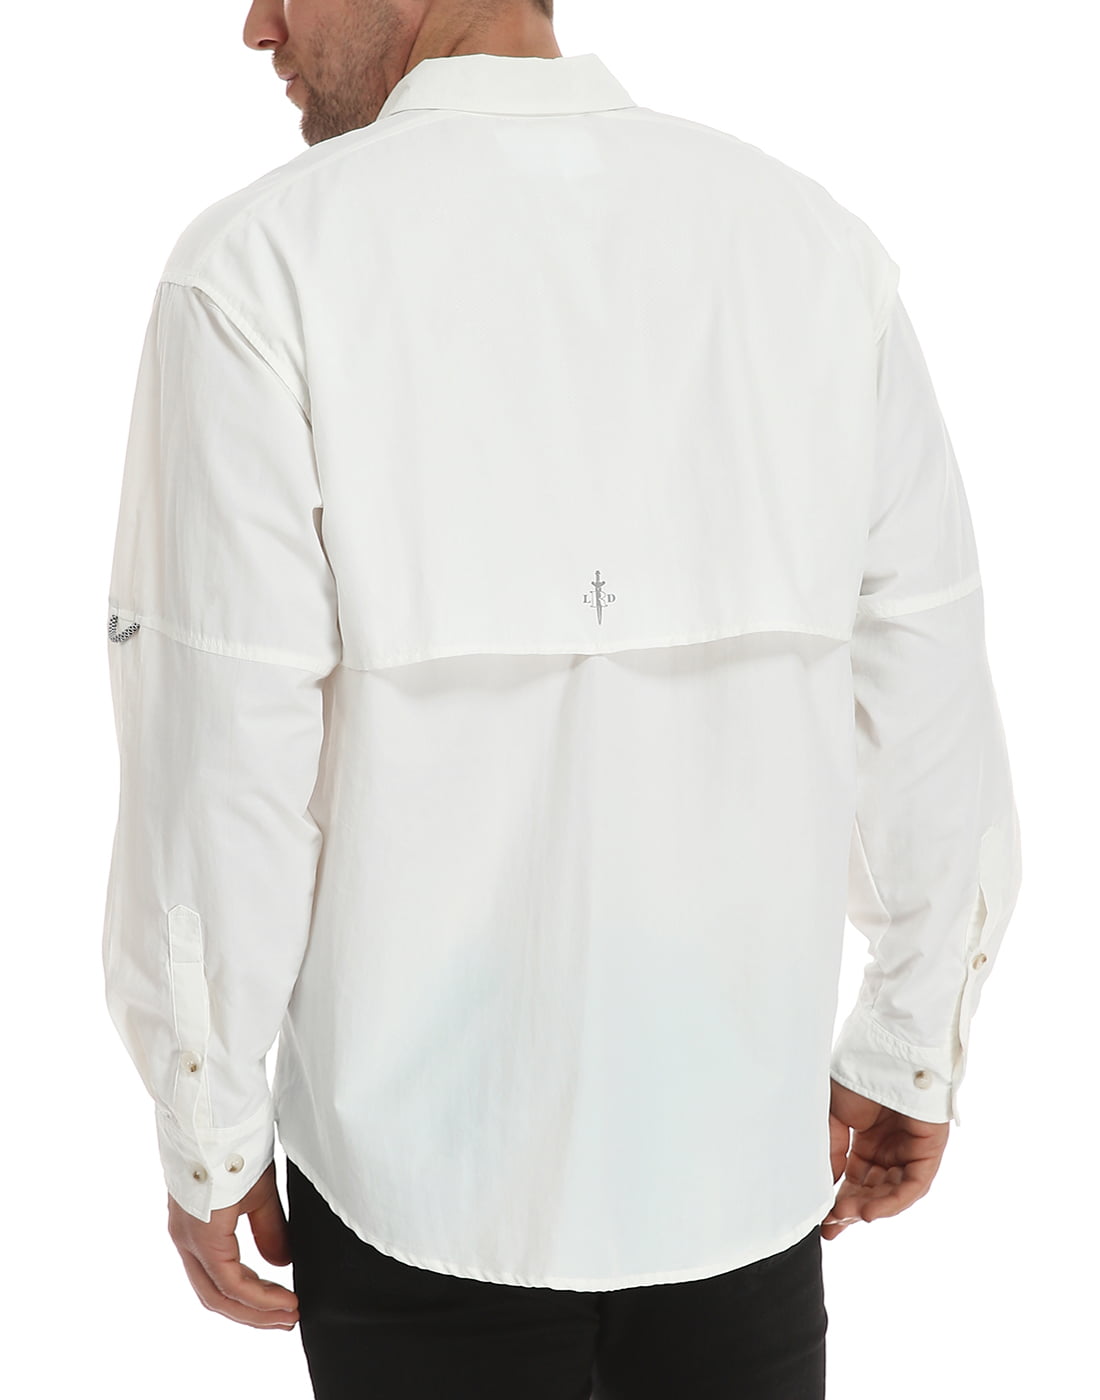 LRD Men's UPF 30 Long Sleeve Button Down Fishing Shirts White